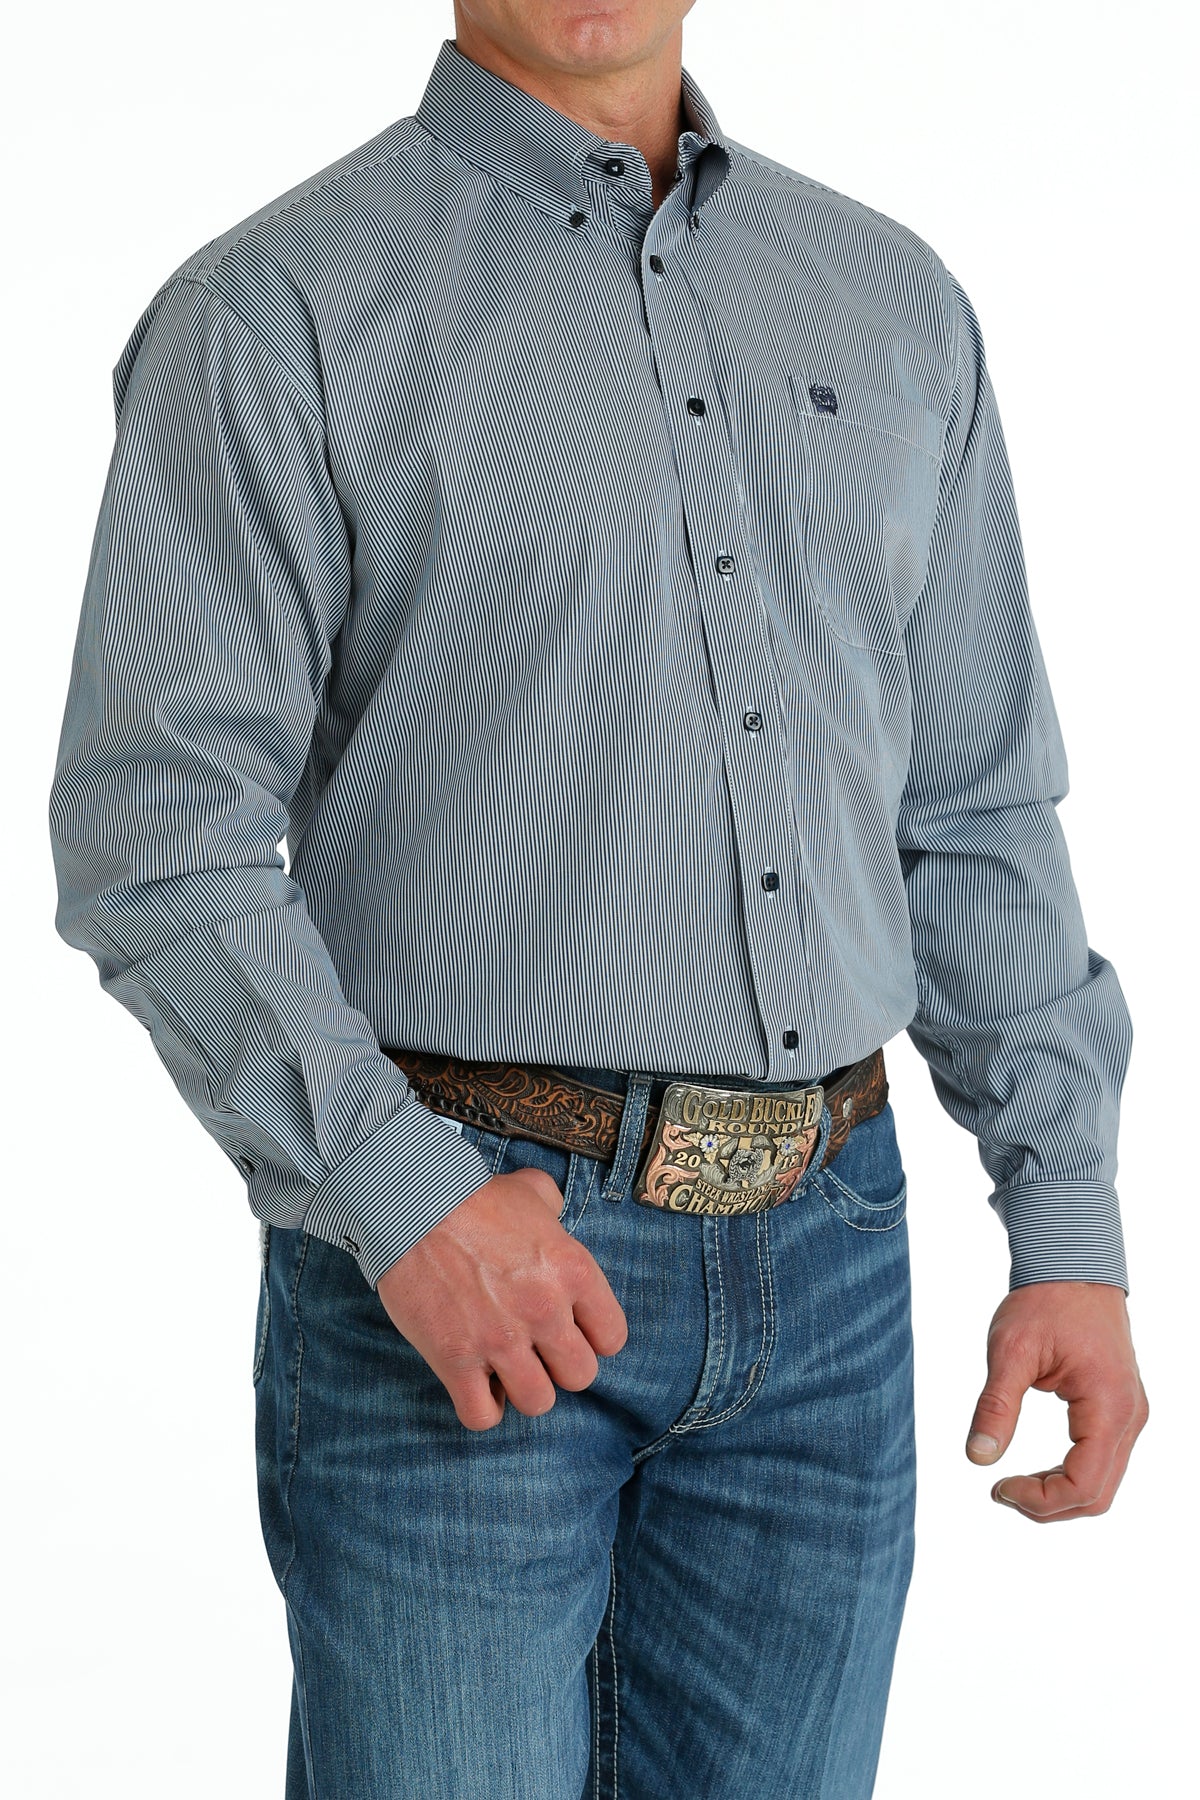 CINCH Men's Pinstripe Button-Down Western Shirt